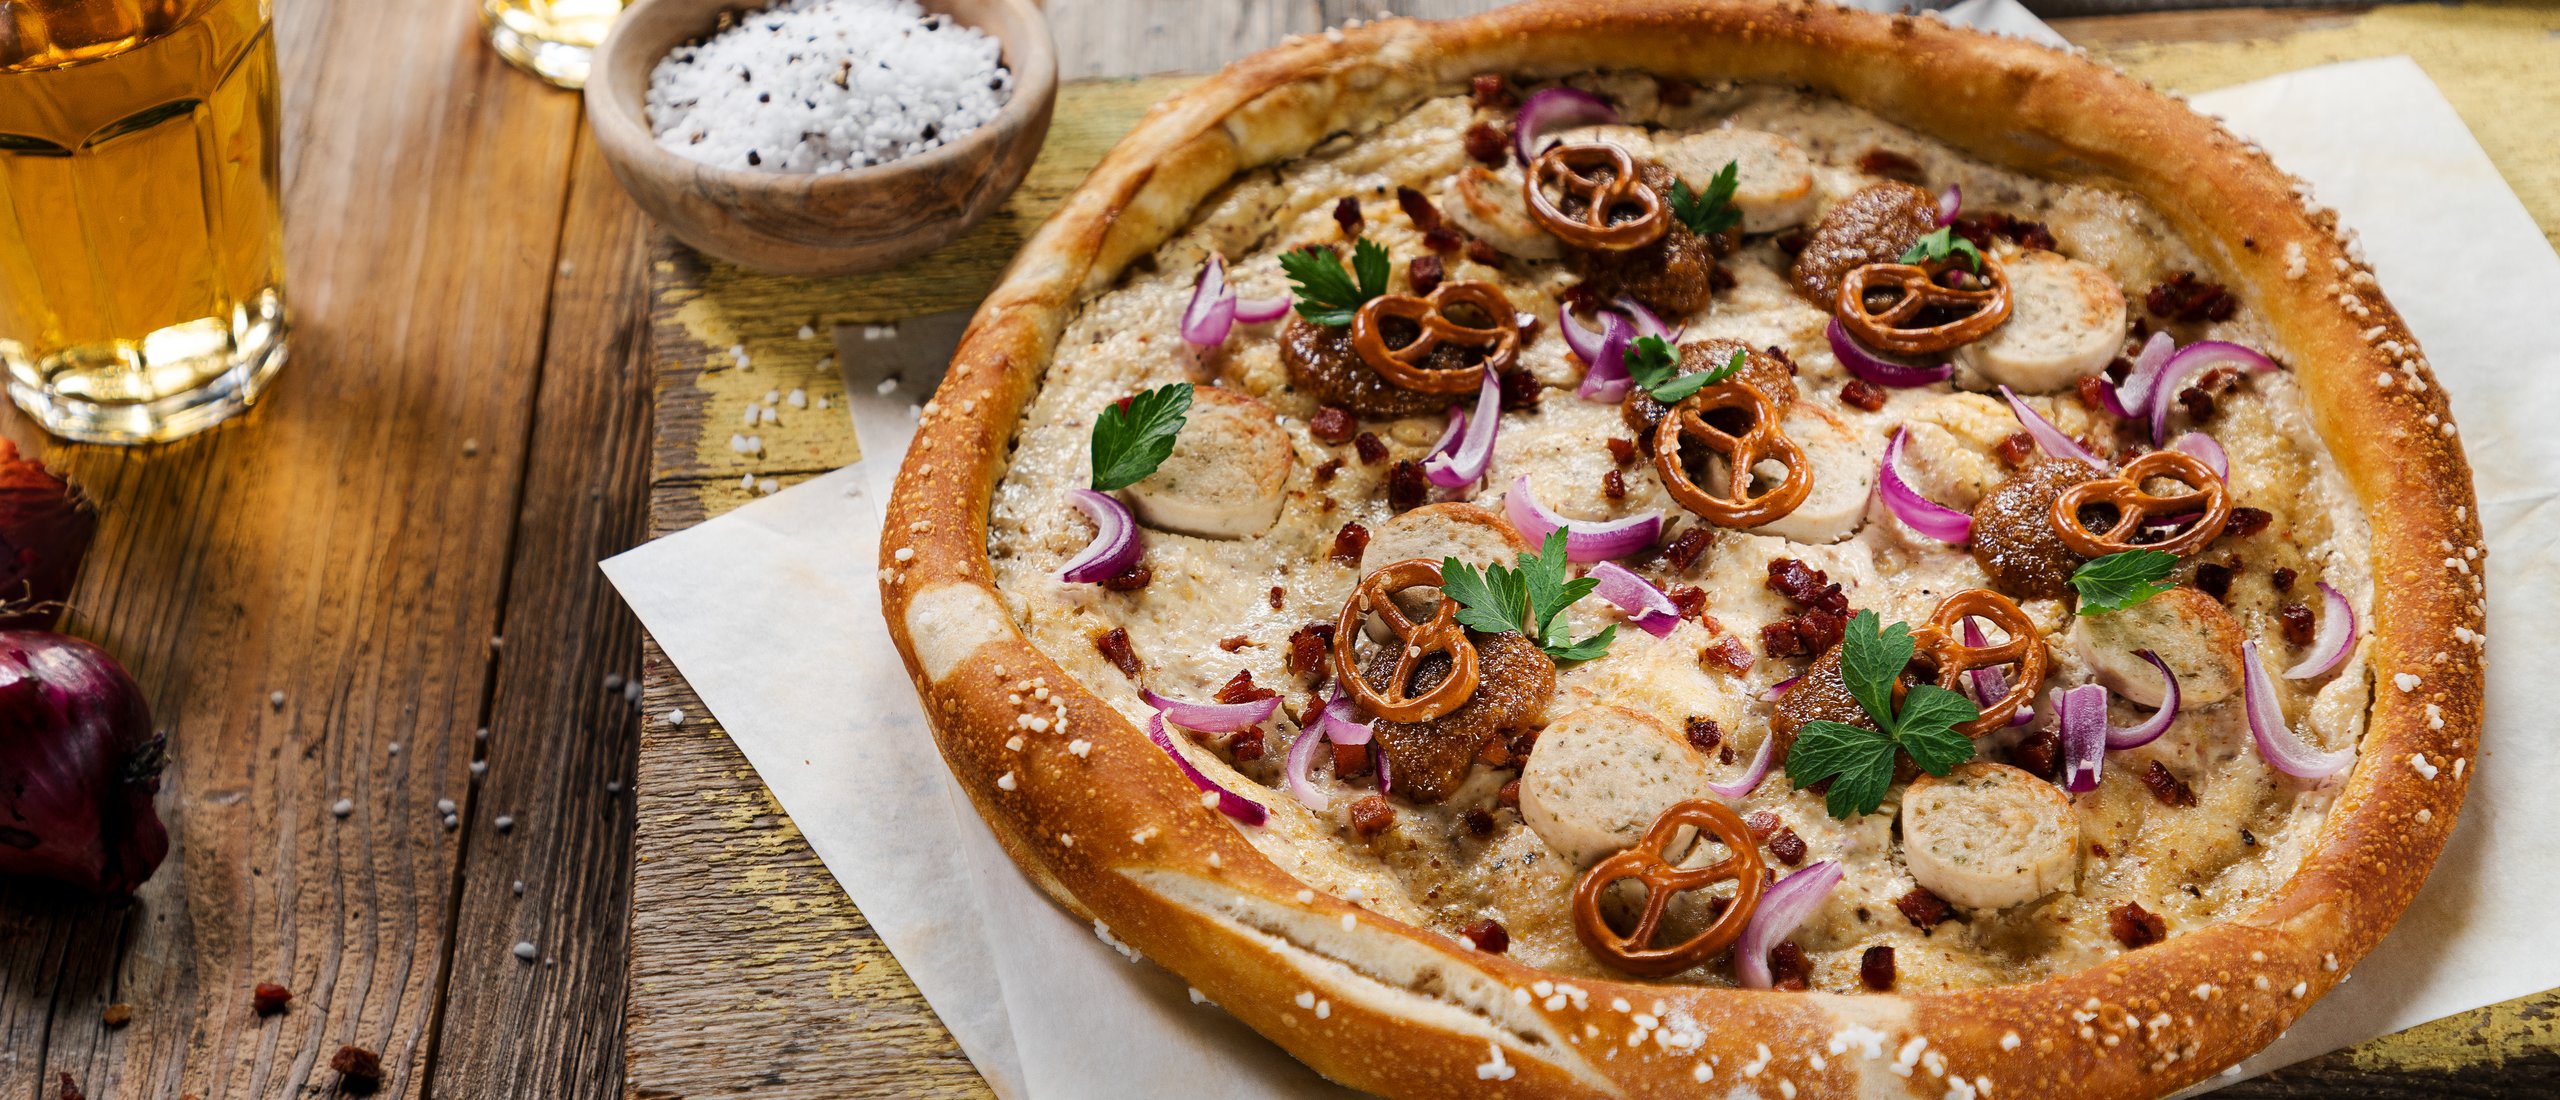 Develey Rezept: Weißwurst-Pizza mit süßem Senf